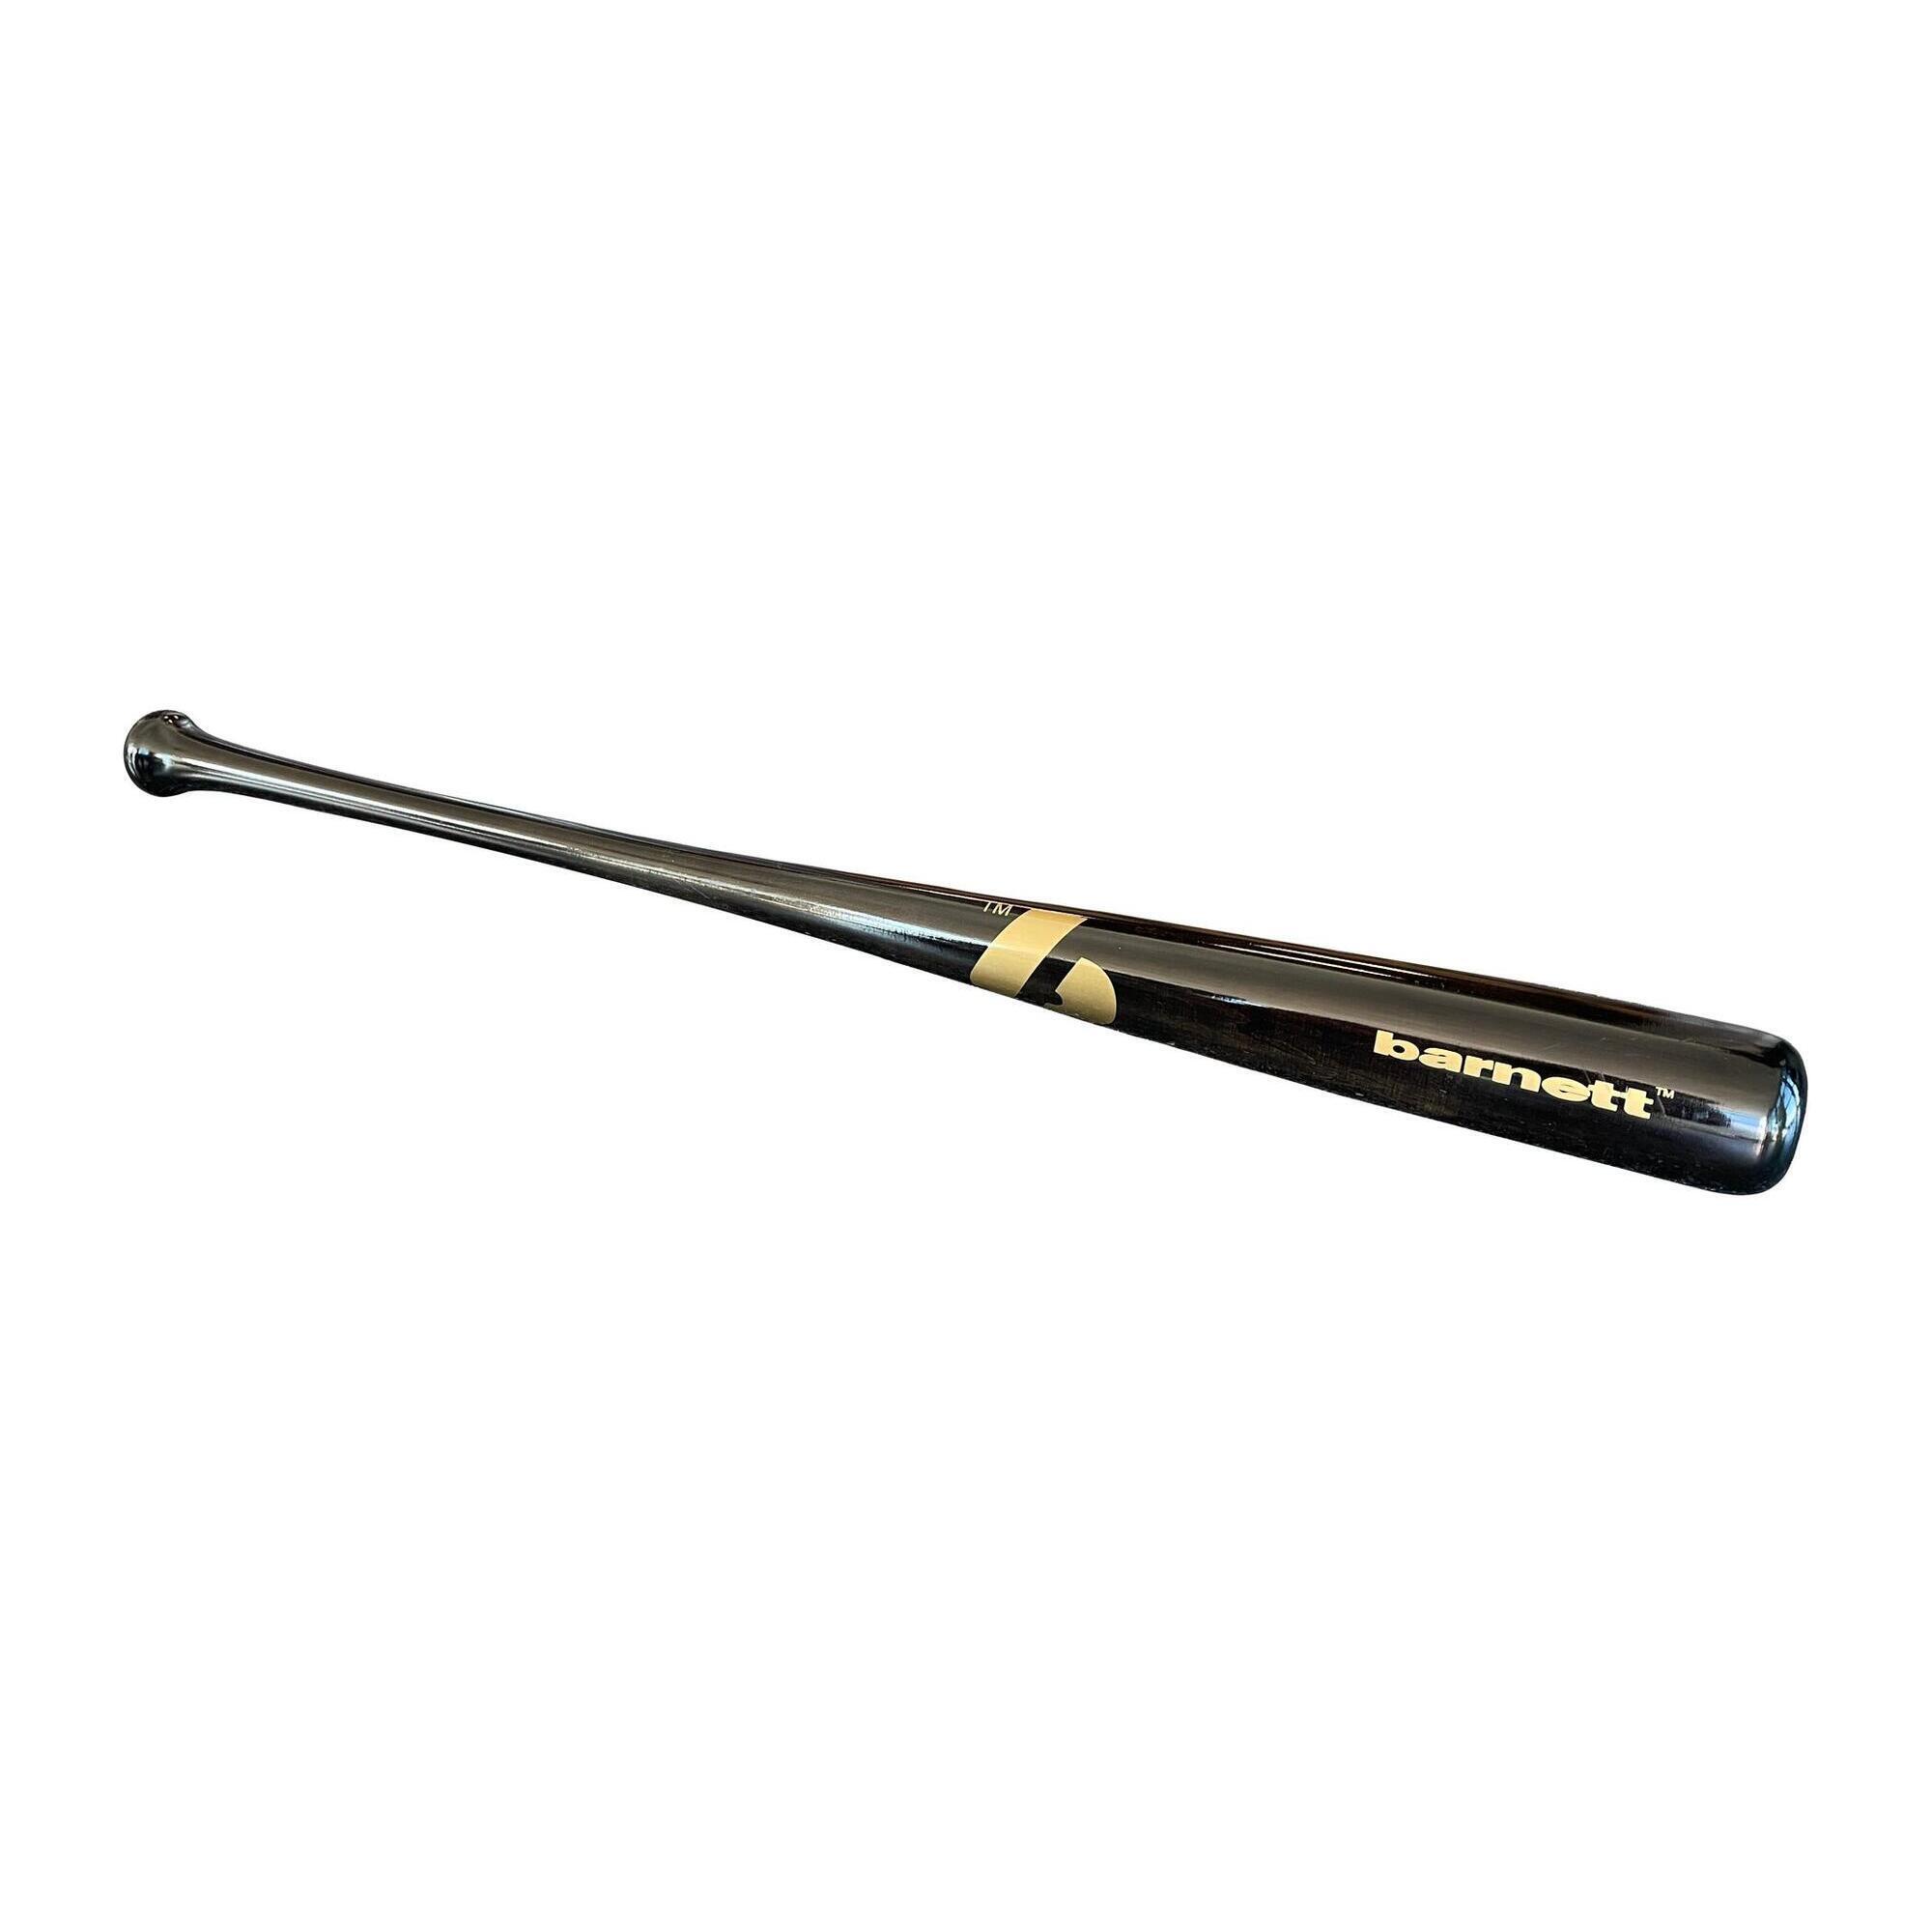  Pro baseball bat, model 210-4 BB-10 32" 1/5